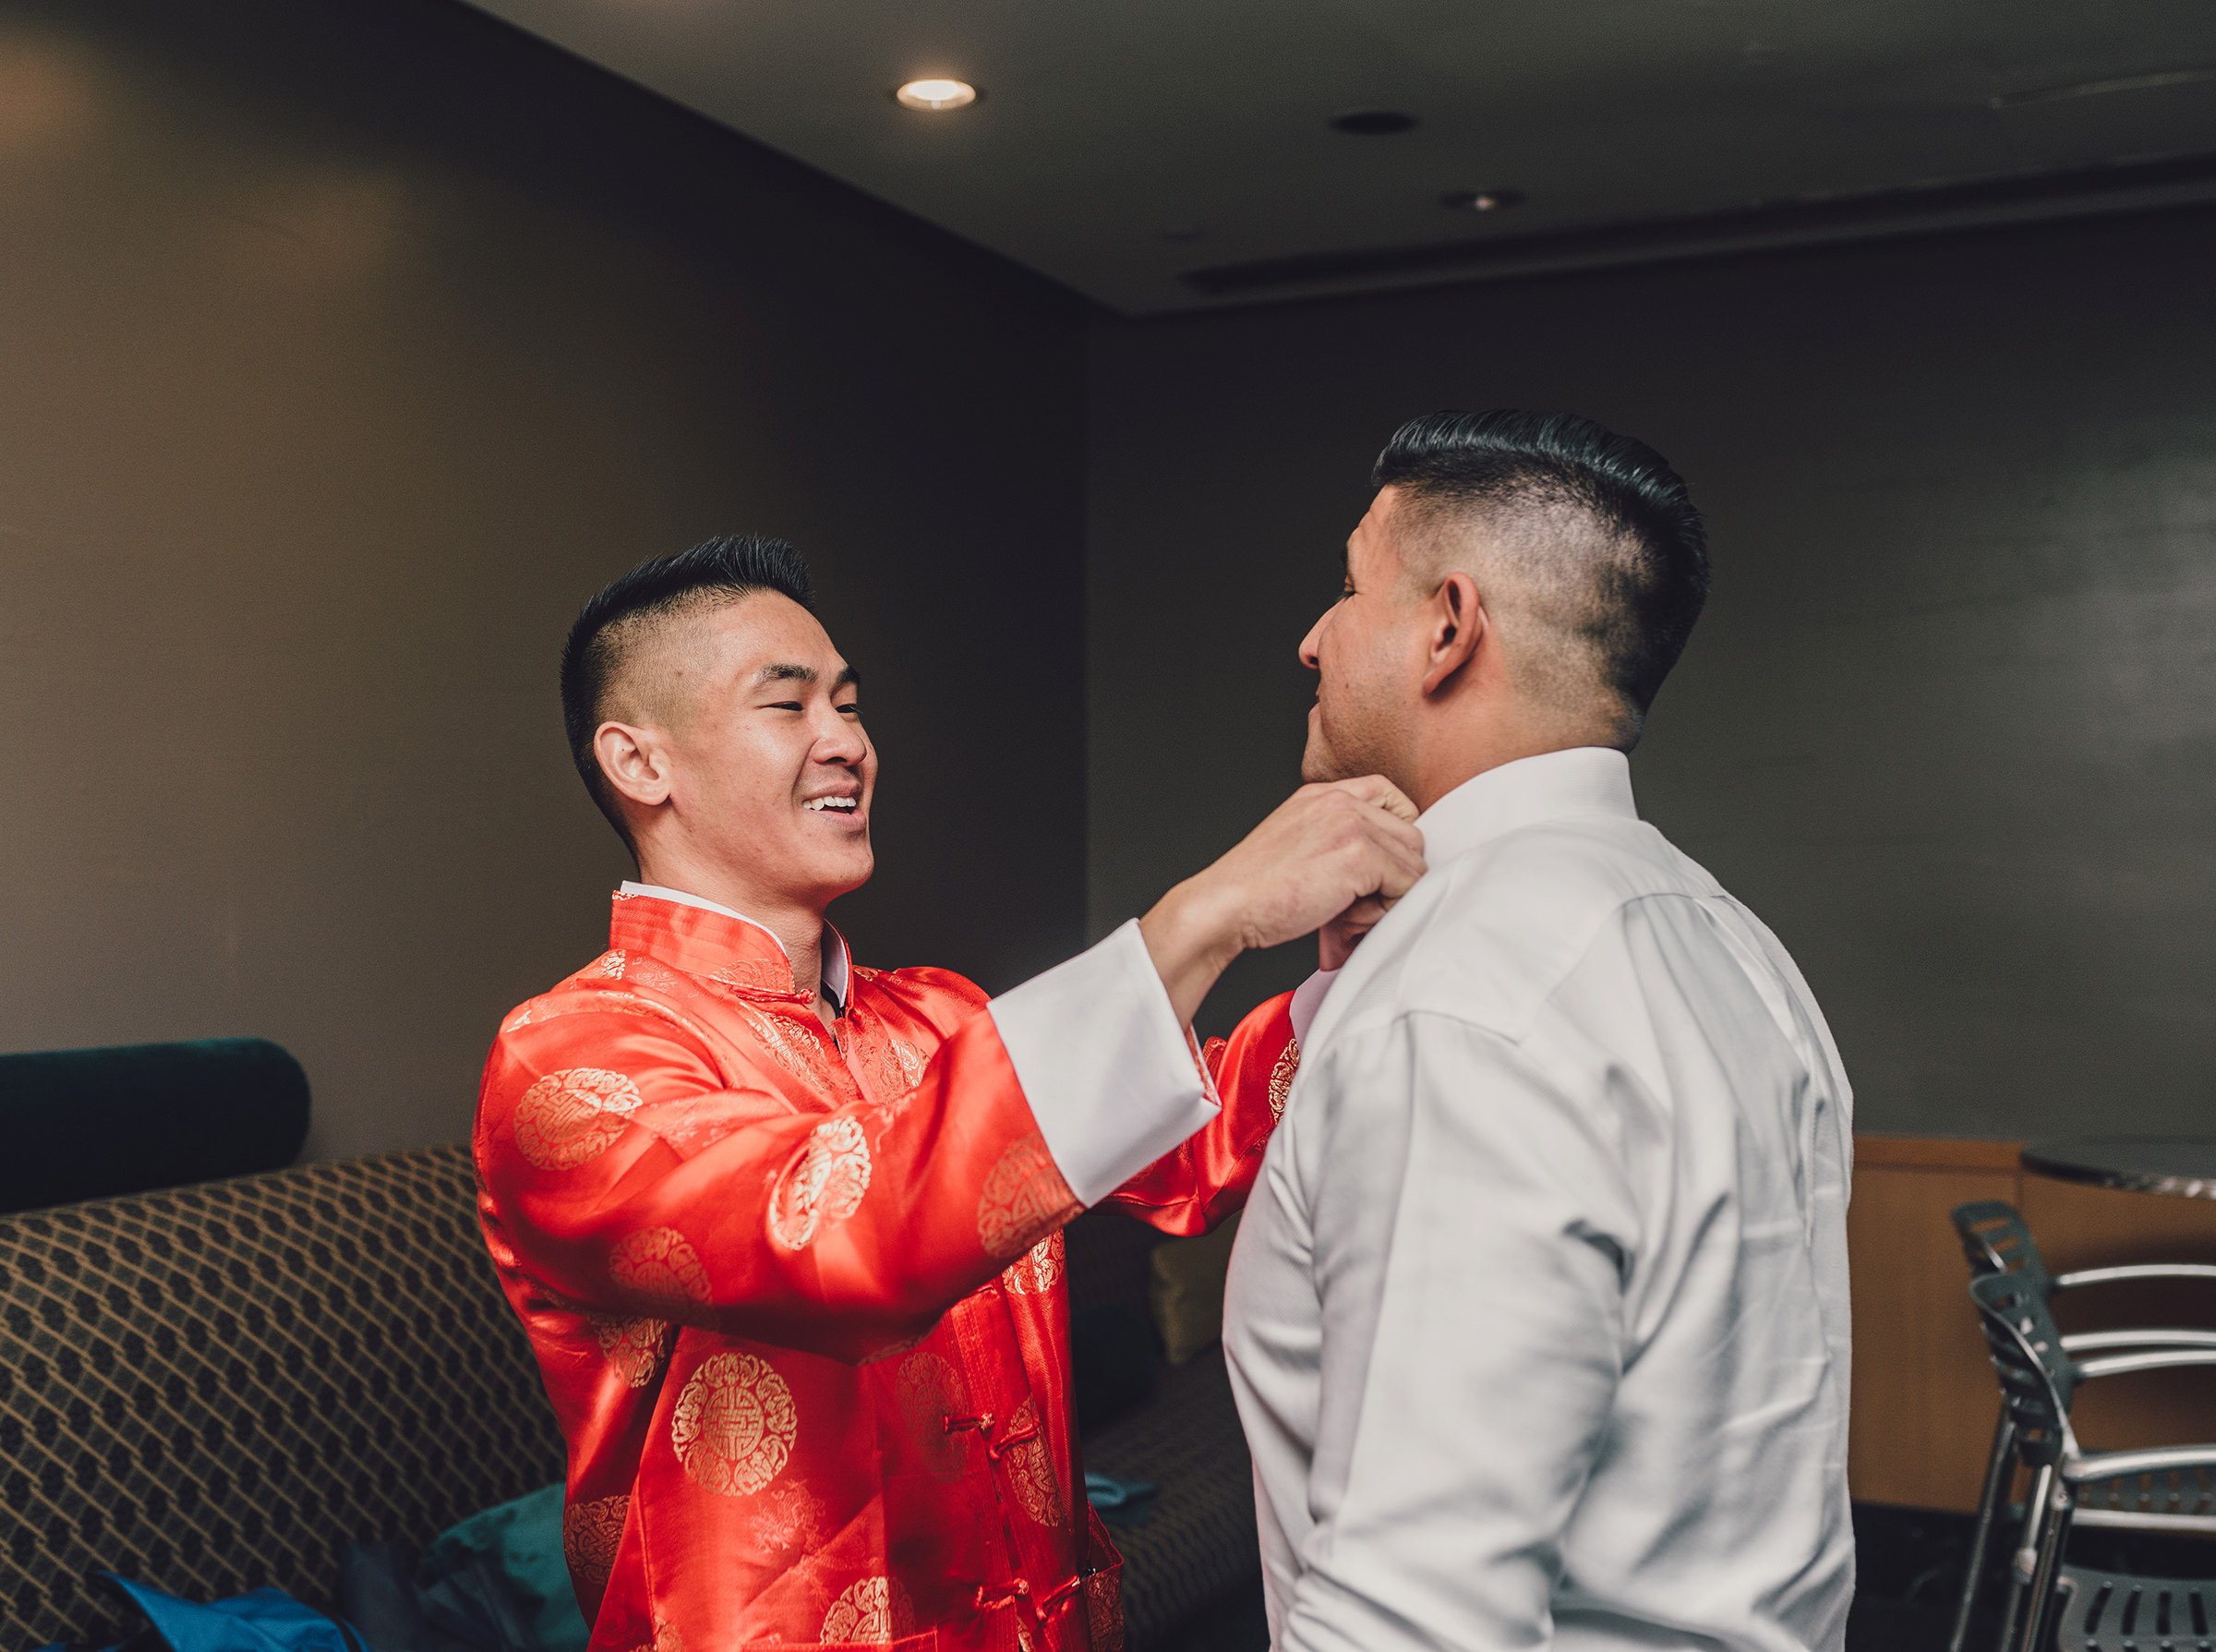 modern-asian-american-wedding-groom-groomsmen-getting-ready-los-angeles-socal-photographer.jpg